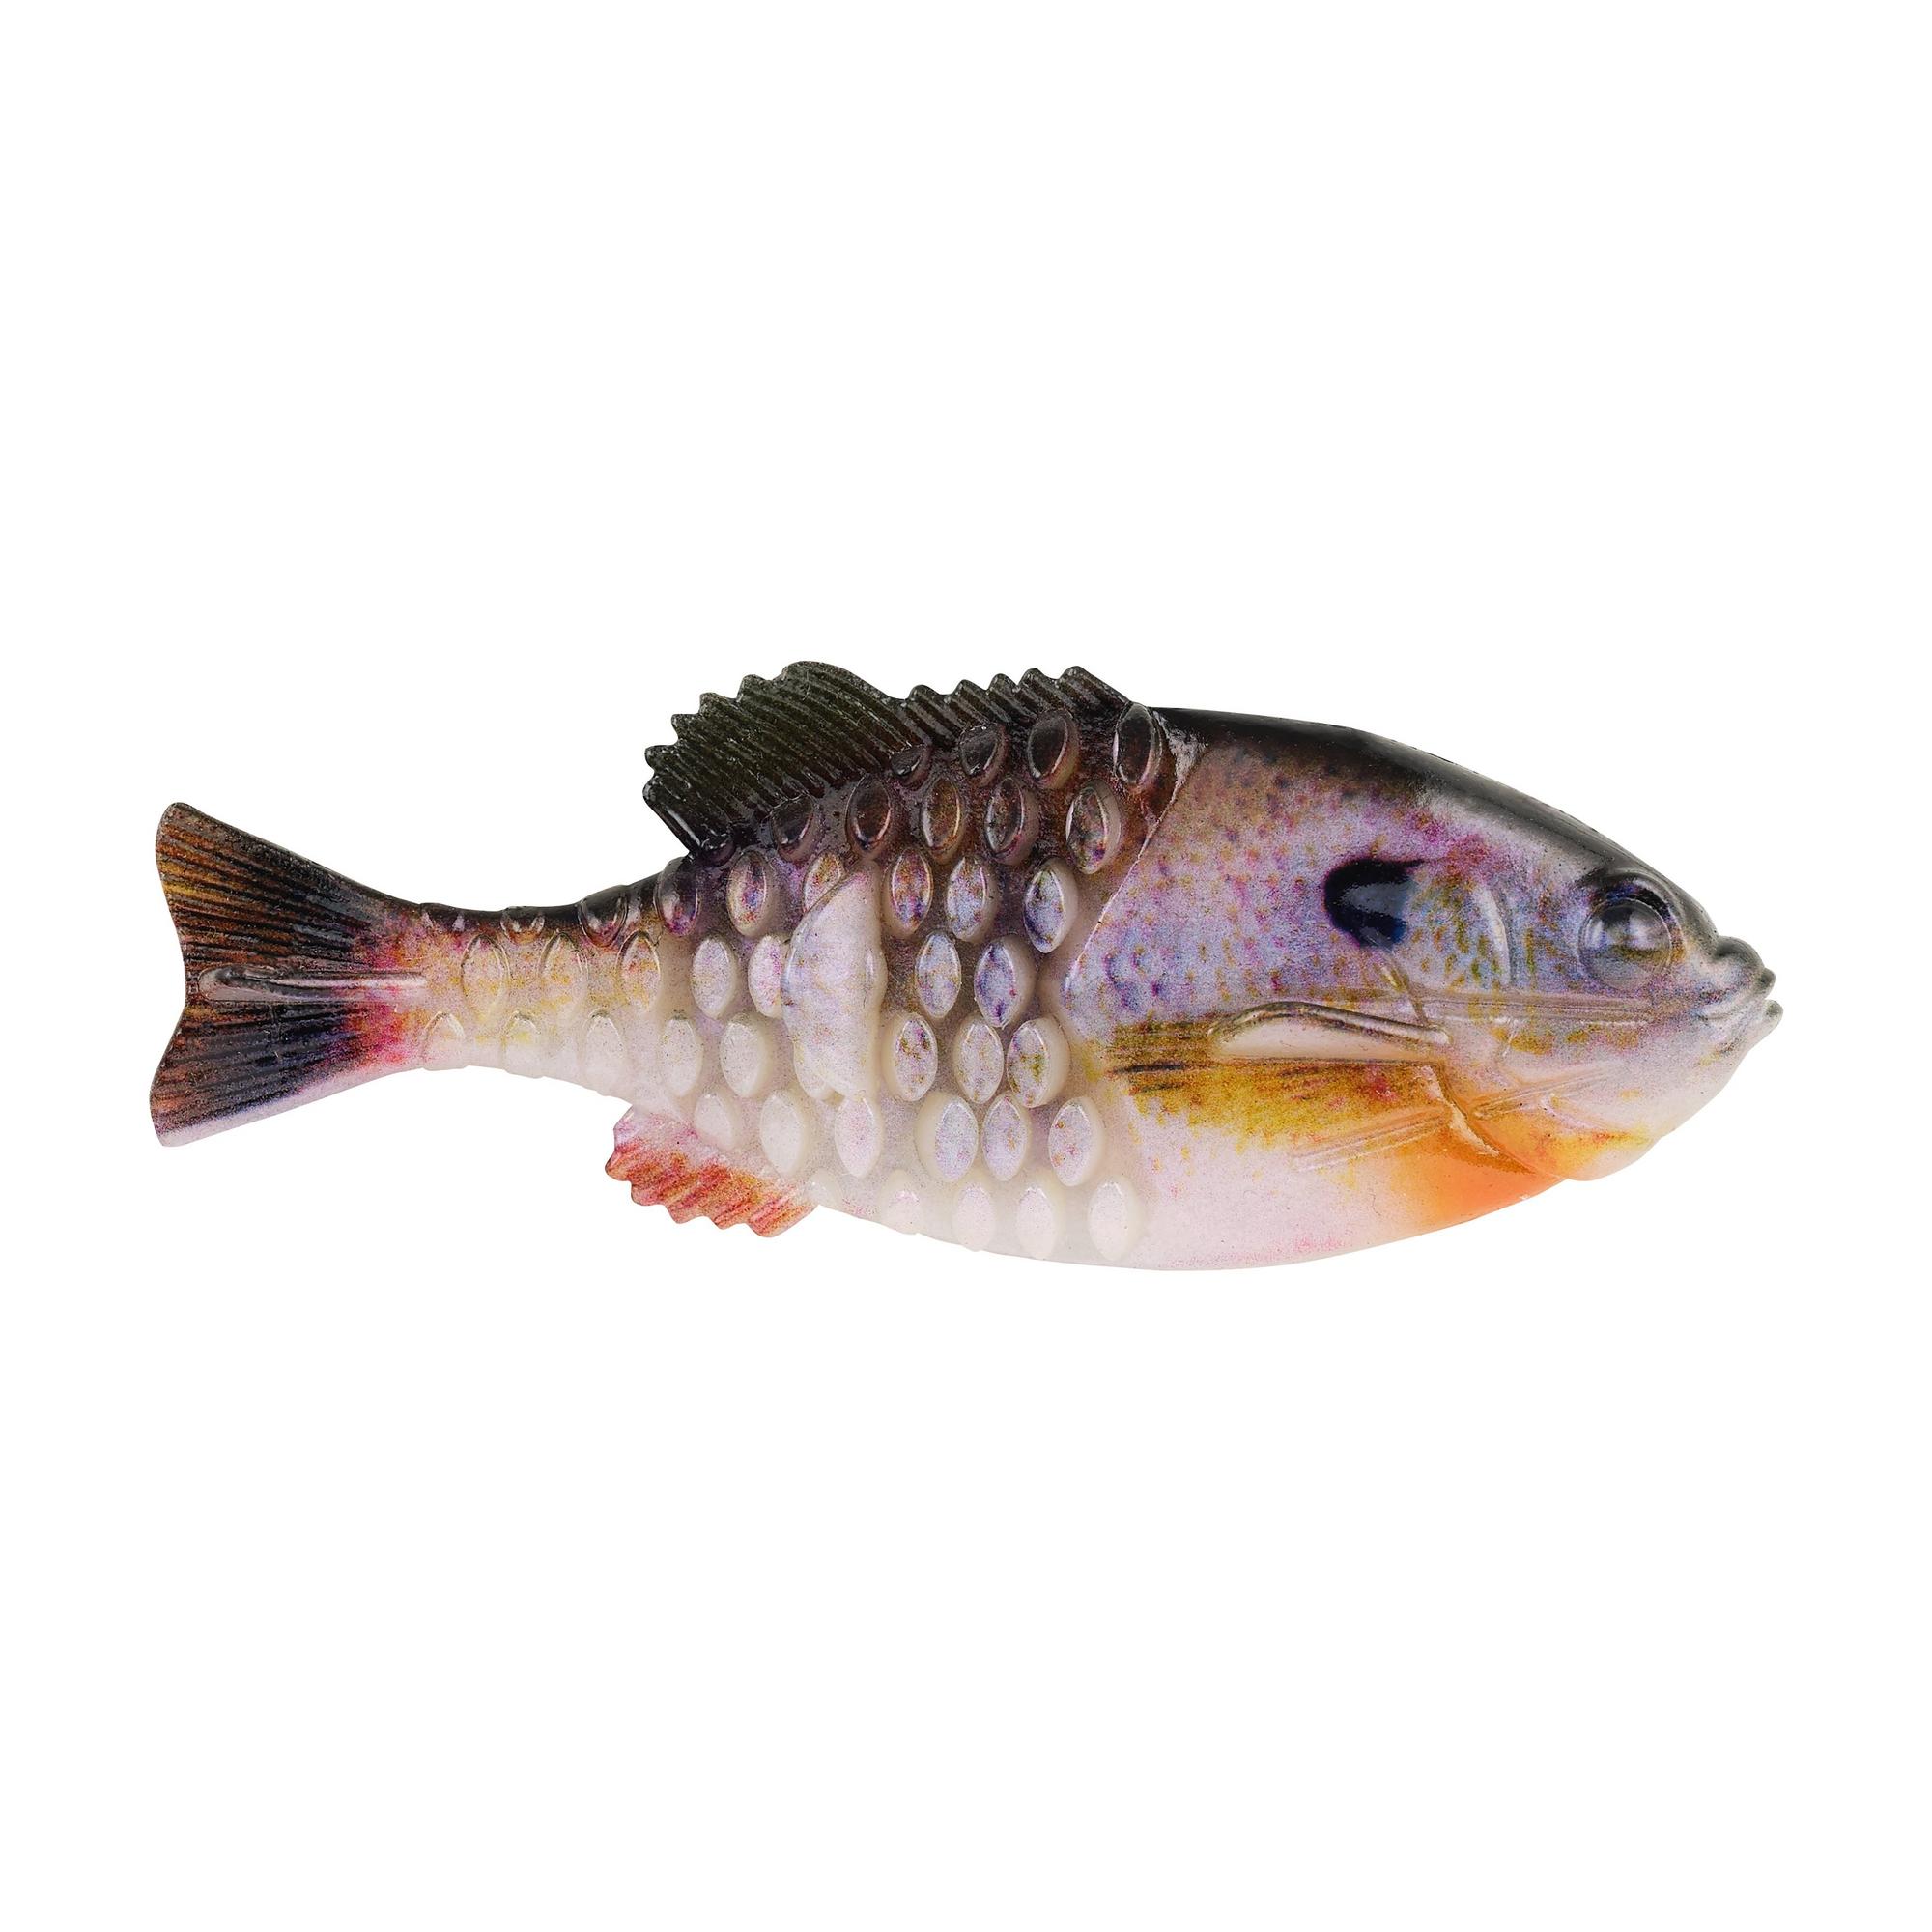 Berkley Fishing - Rainbow trout love Berkley PowerBait! Angler